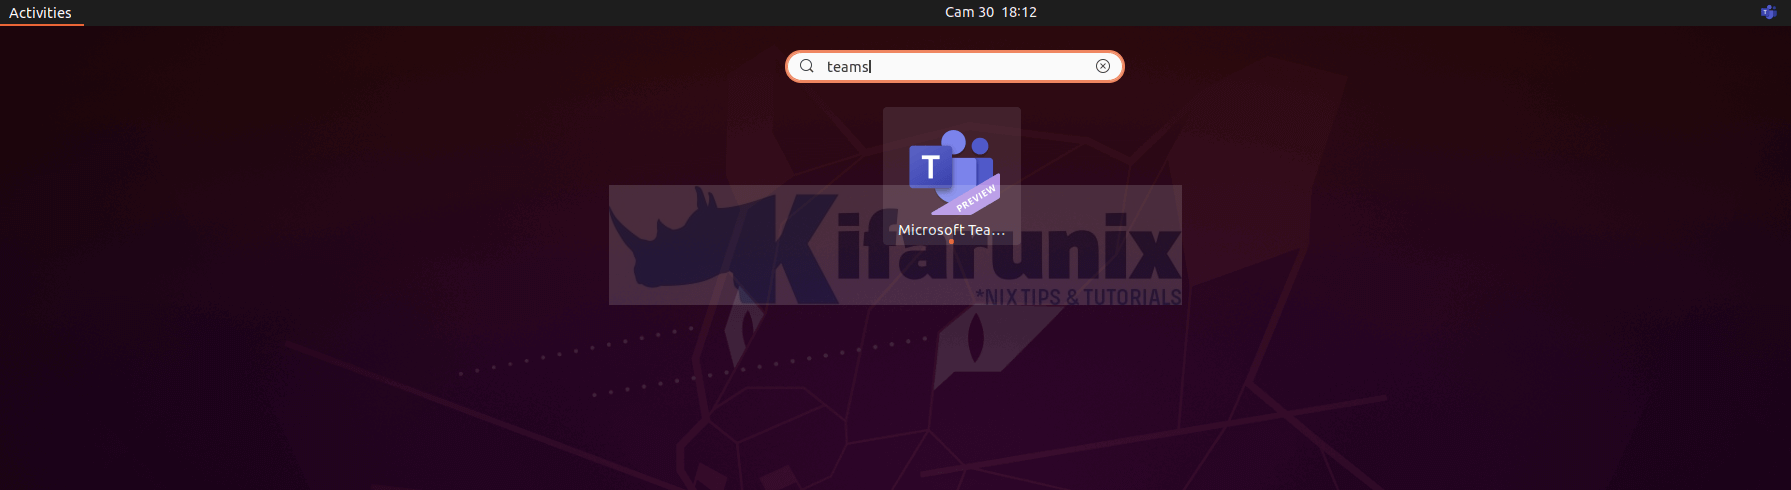 Install Microsoft Teams Client on Ubuntu 20.04/18.04